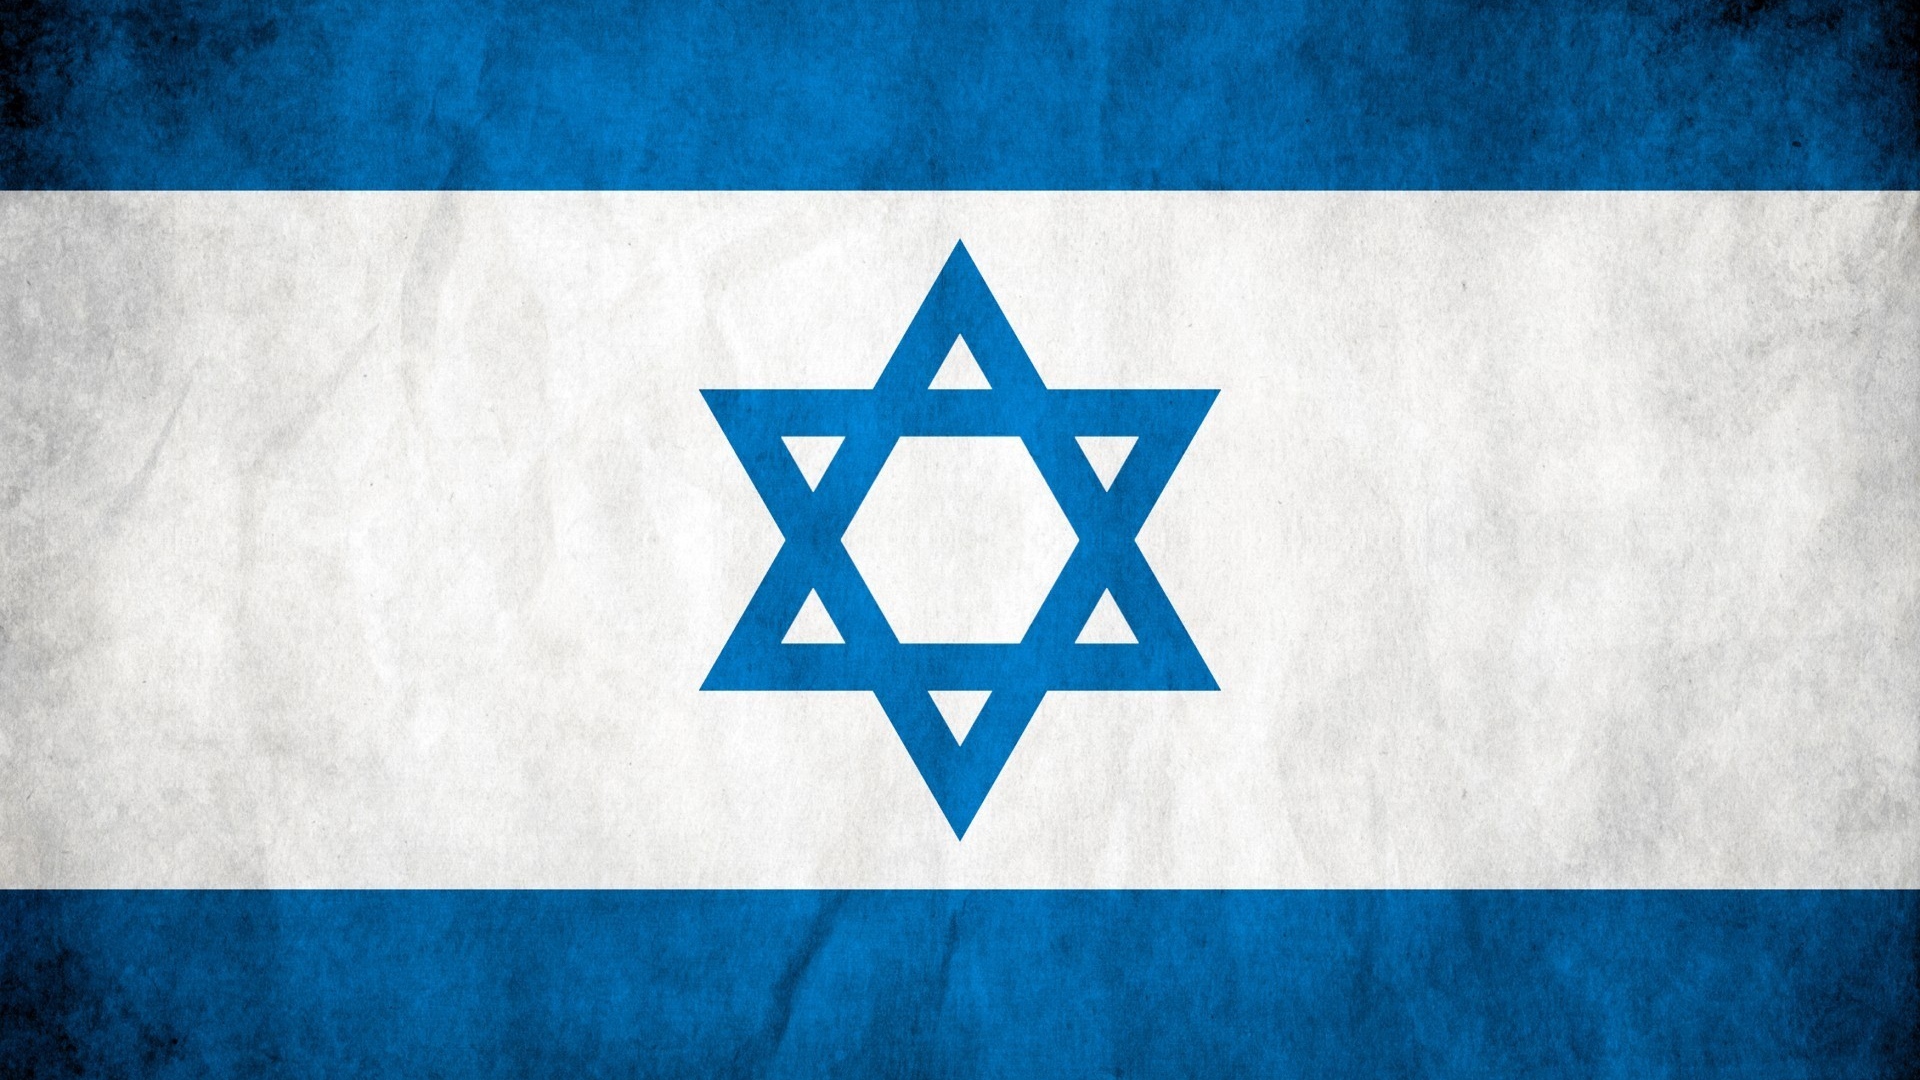 Israel Star Of David Symbol Texture Full HD 1080p Background